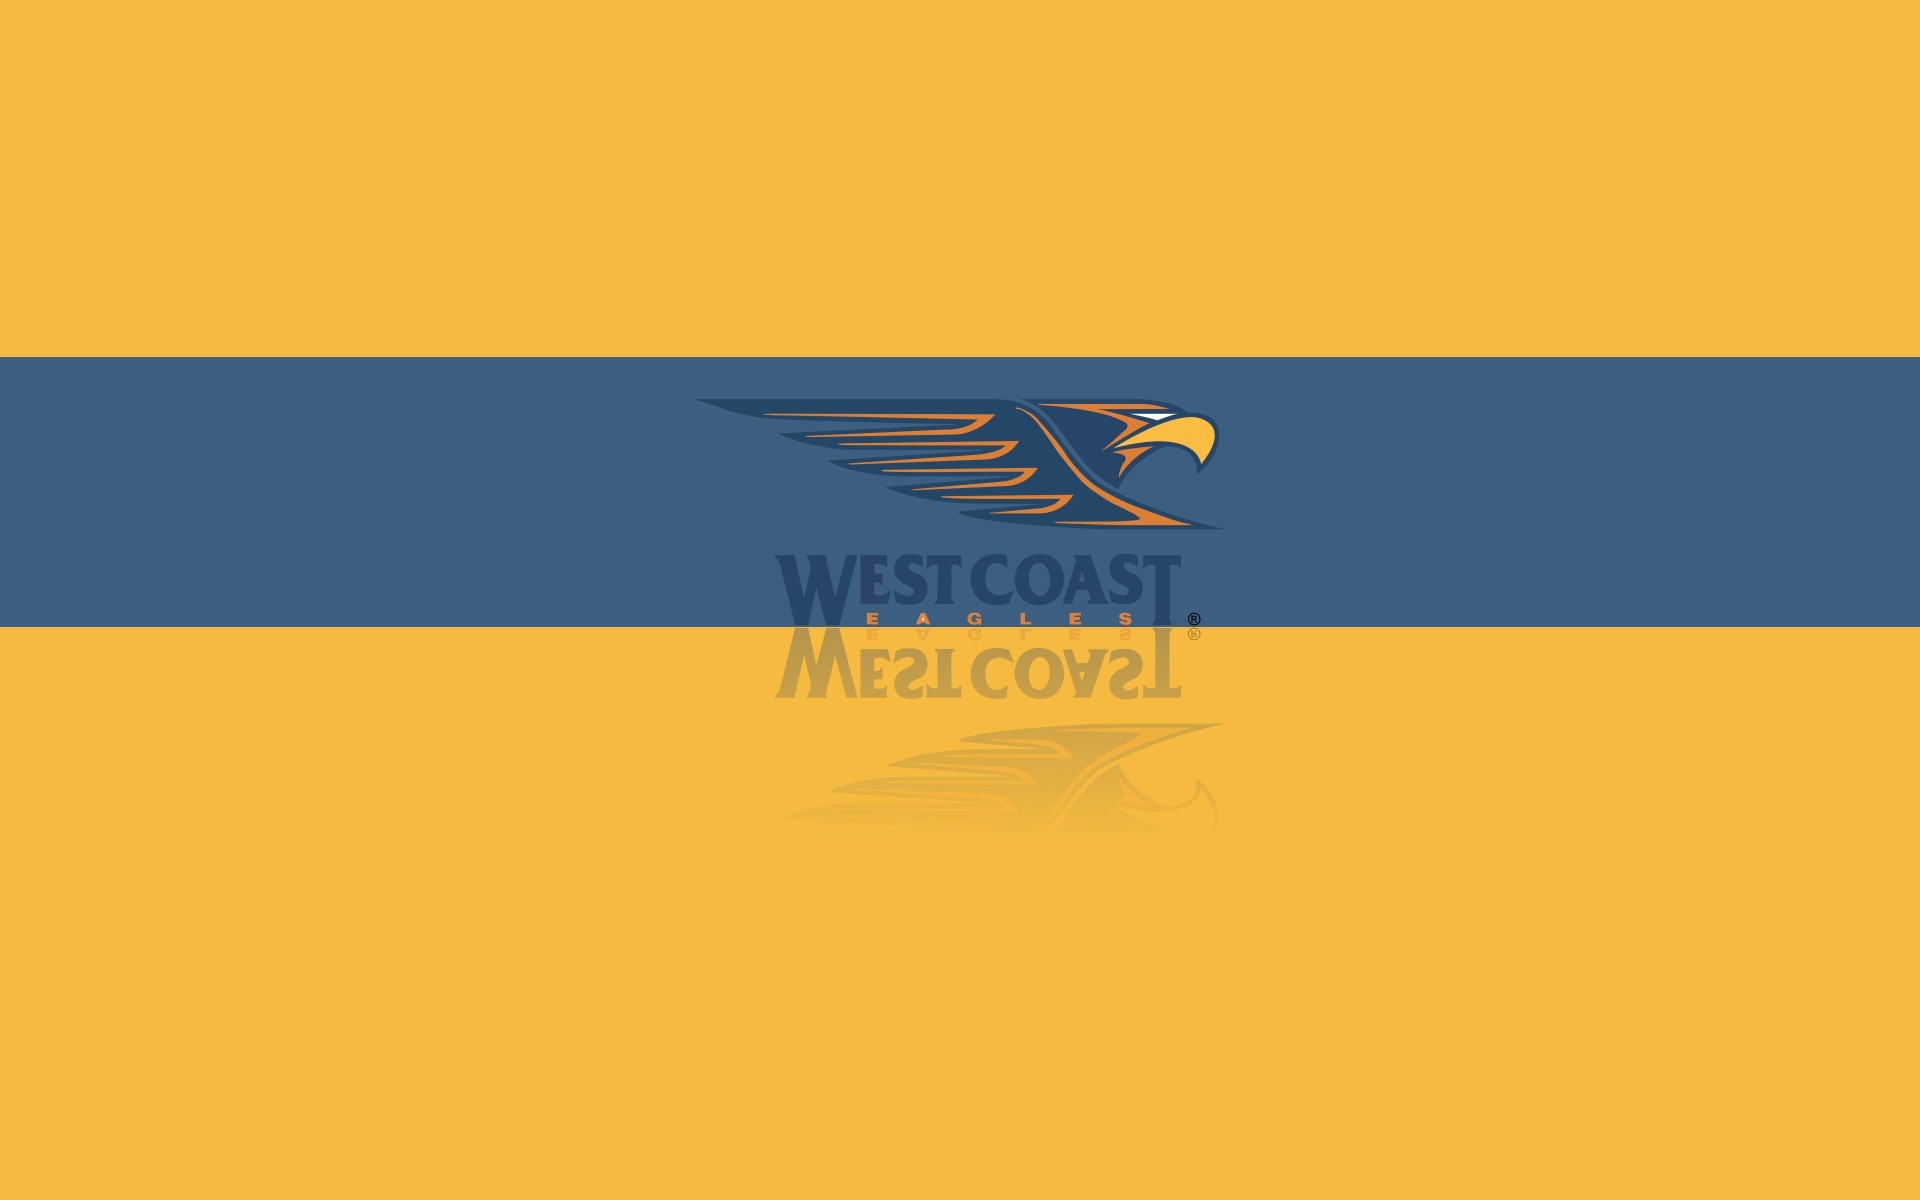 1920x1200 West Coast Eagles FC wallpaper, desktop background with team logo -  px